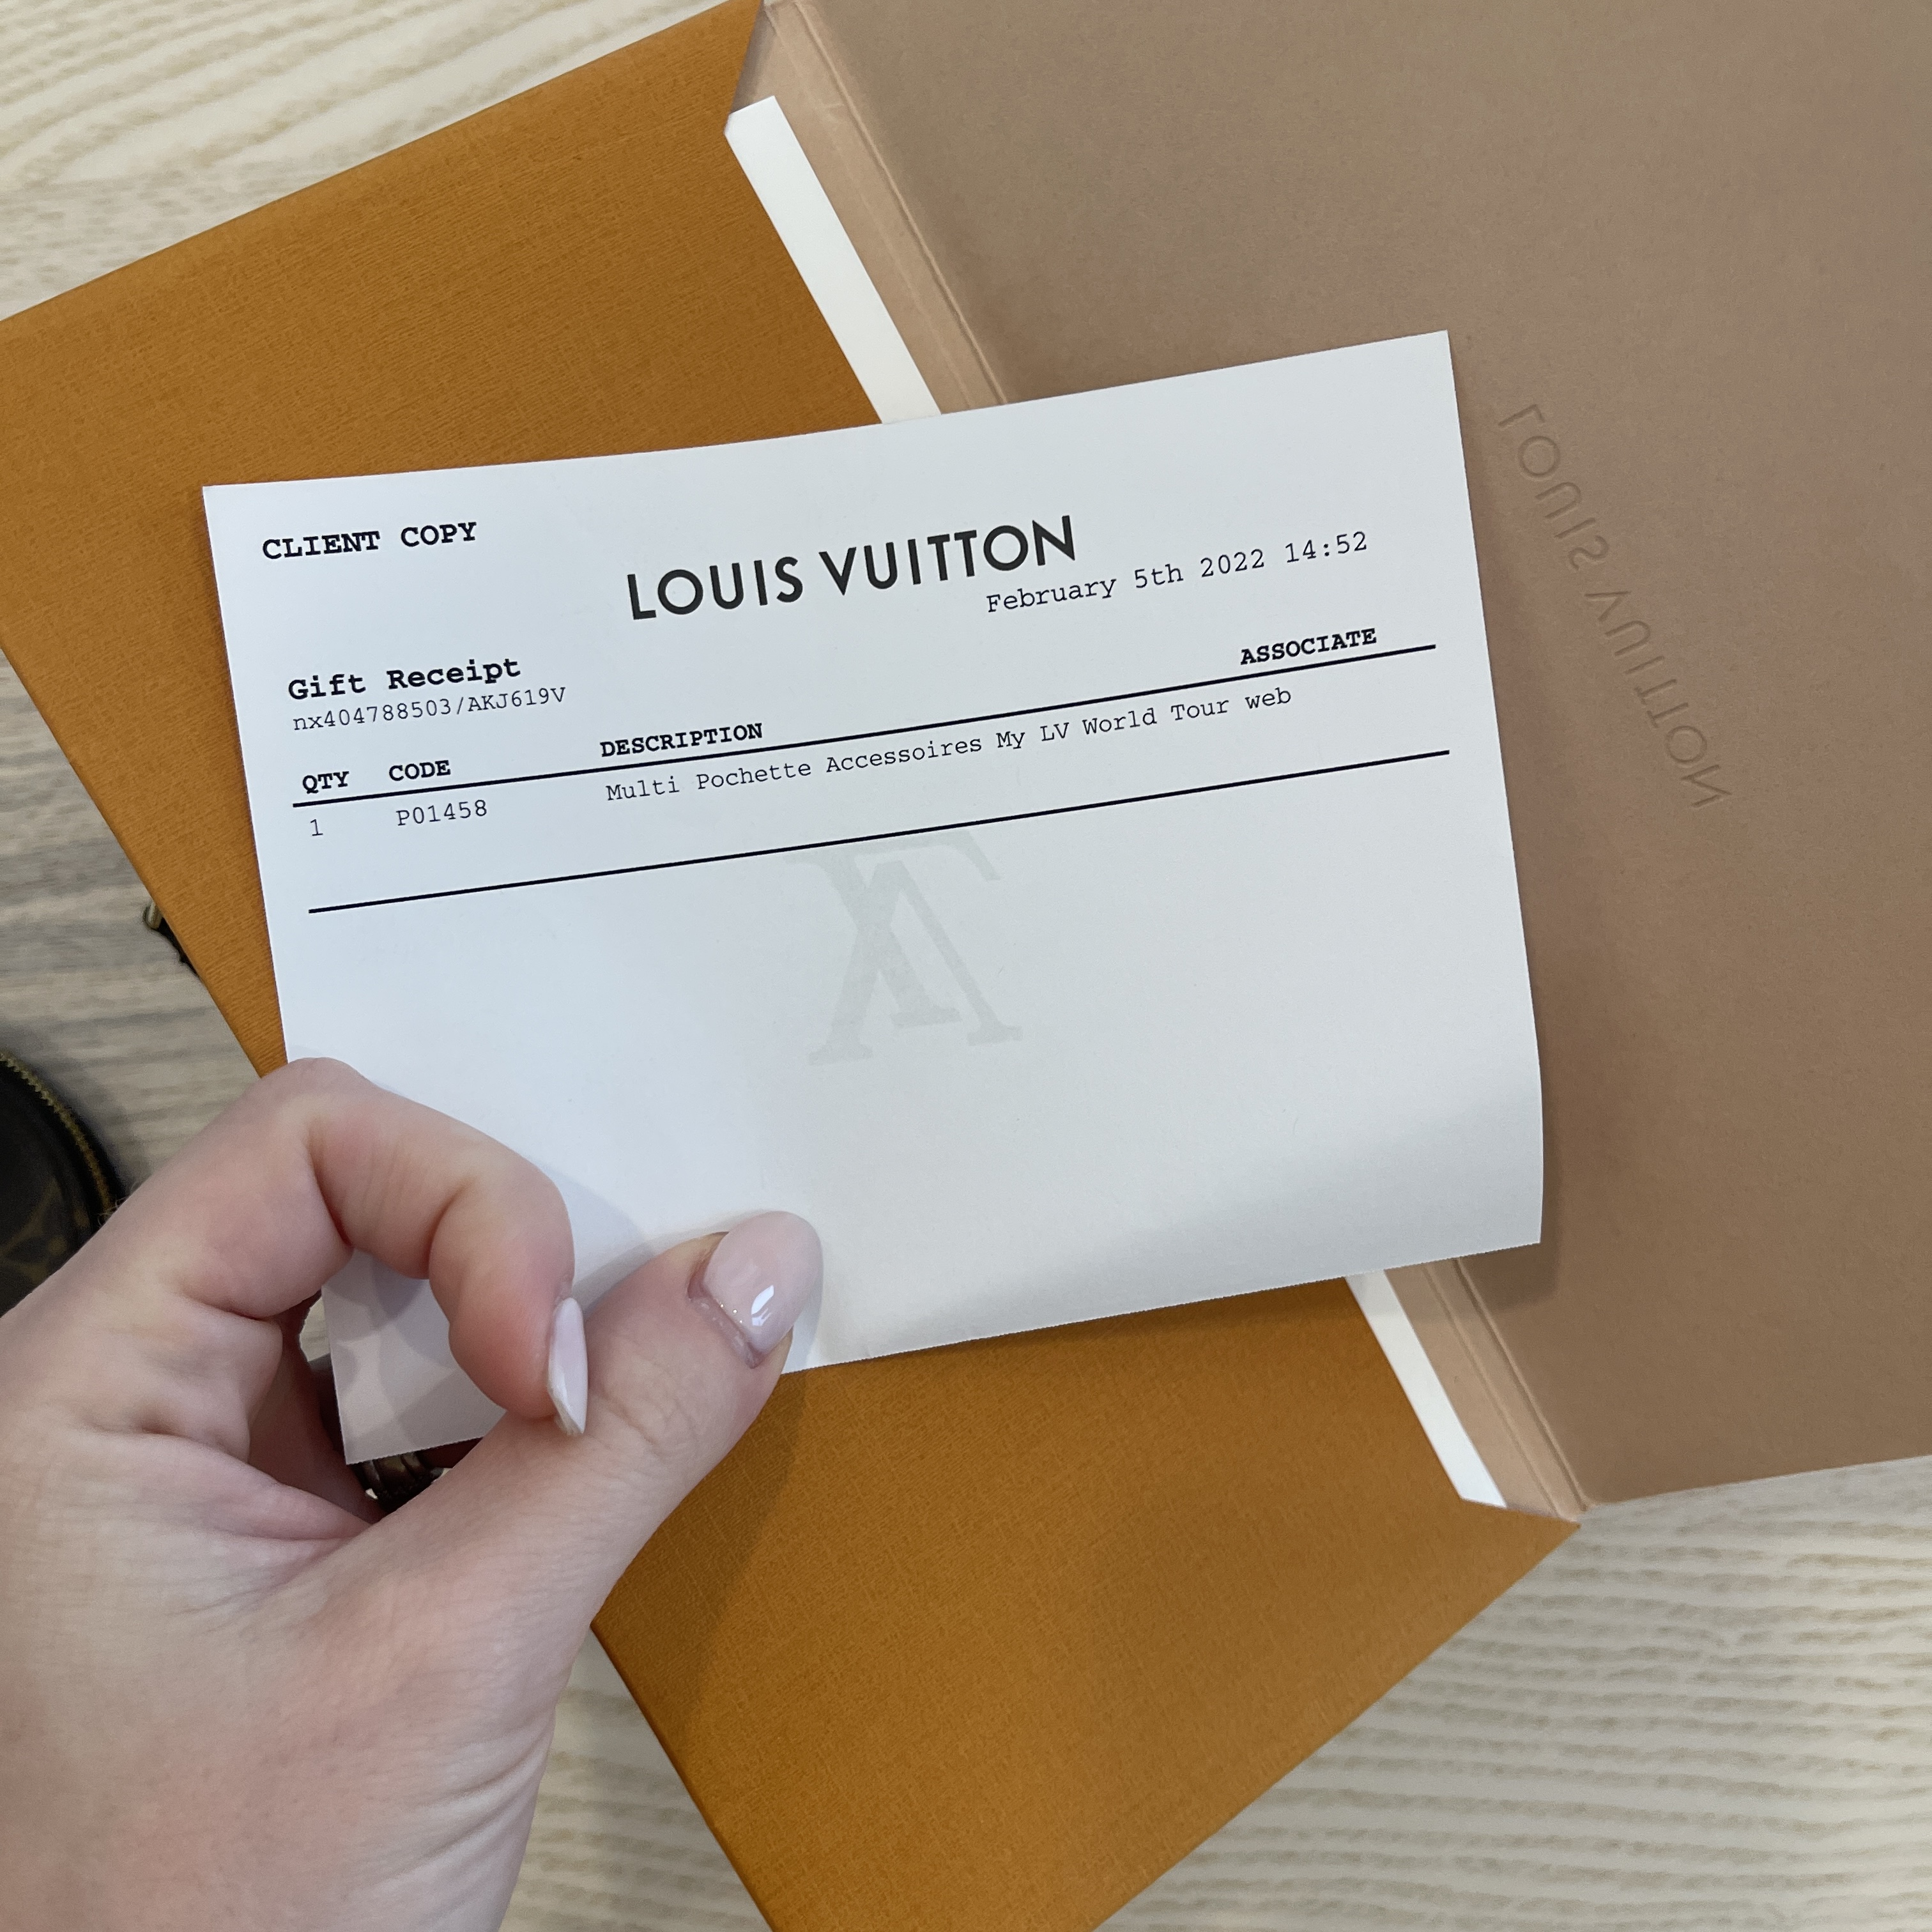 Louis Vuitton Monogram Multi Pochette Accessories My LV World